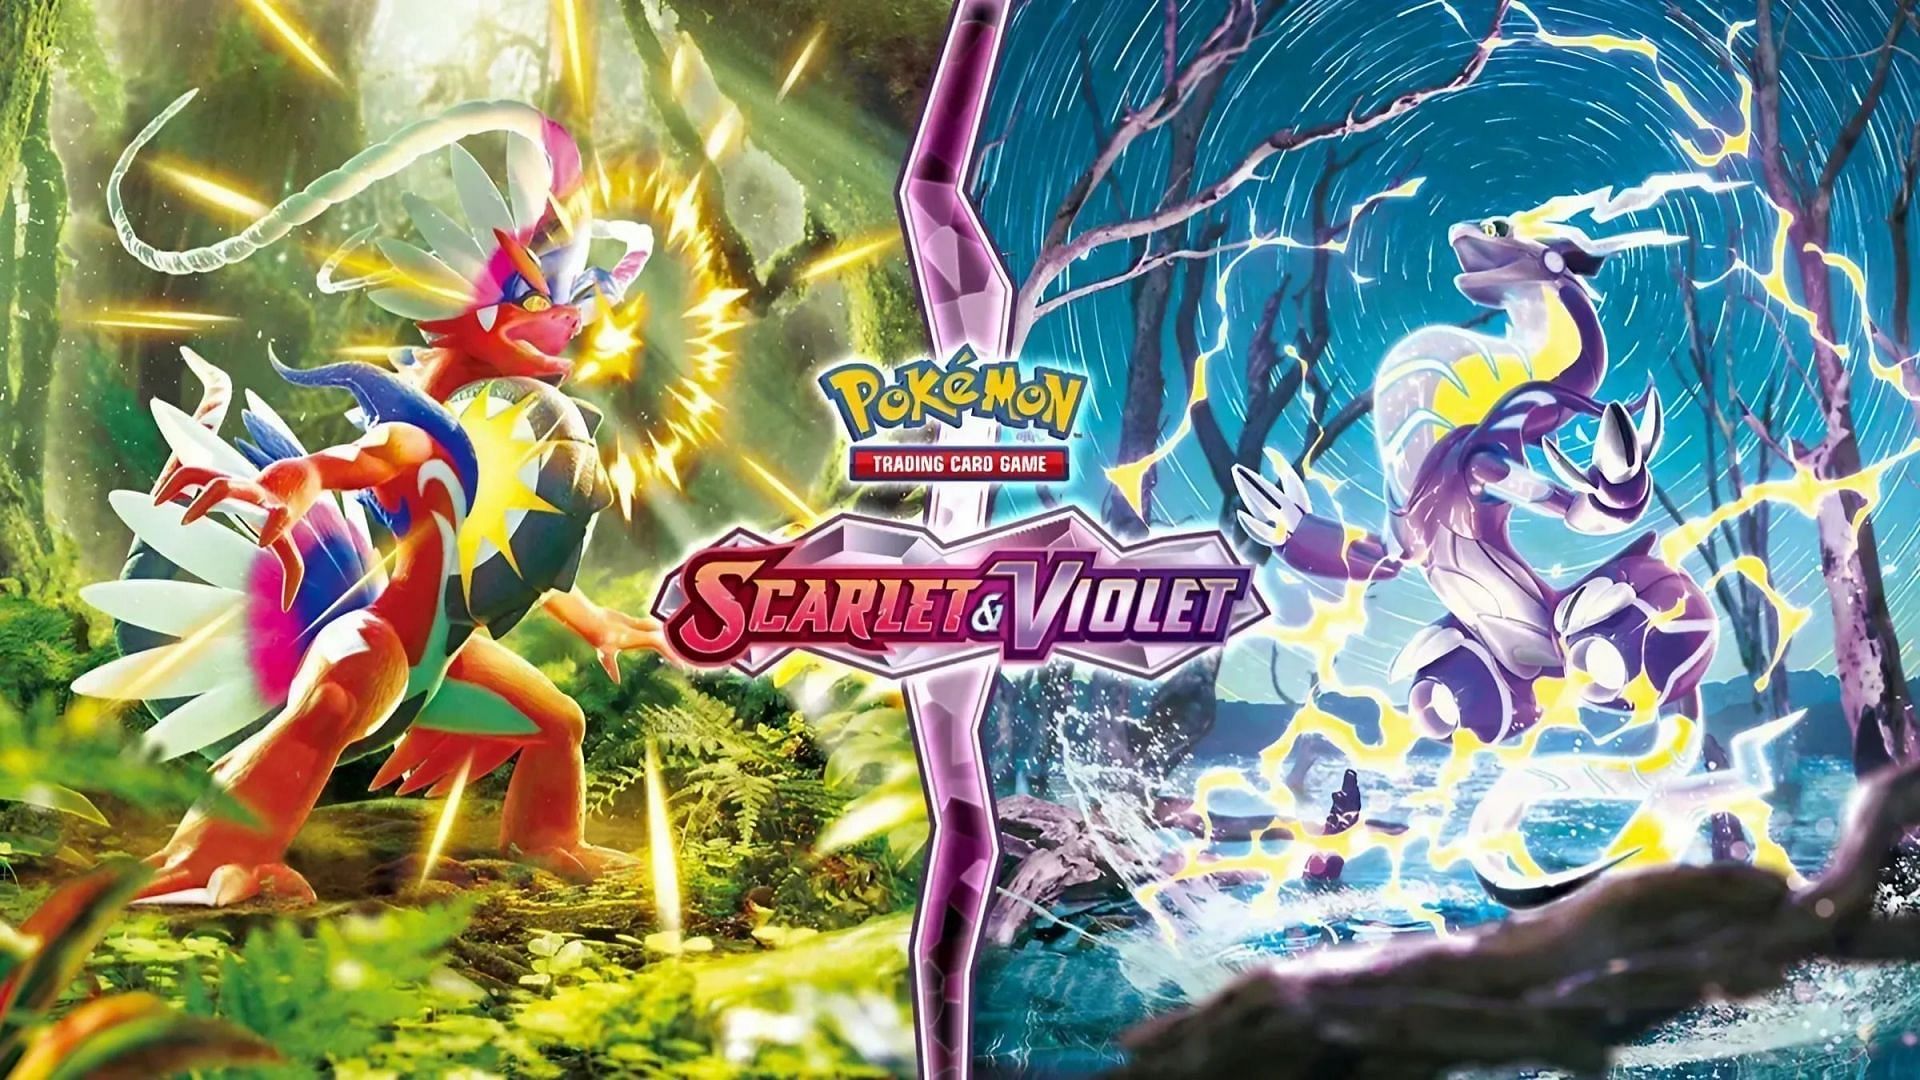 Pokemon TCG Scarlet and Violet ex sets revealed in Japan: All cards